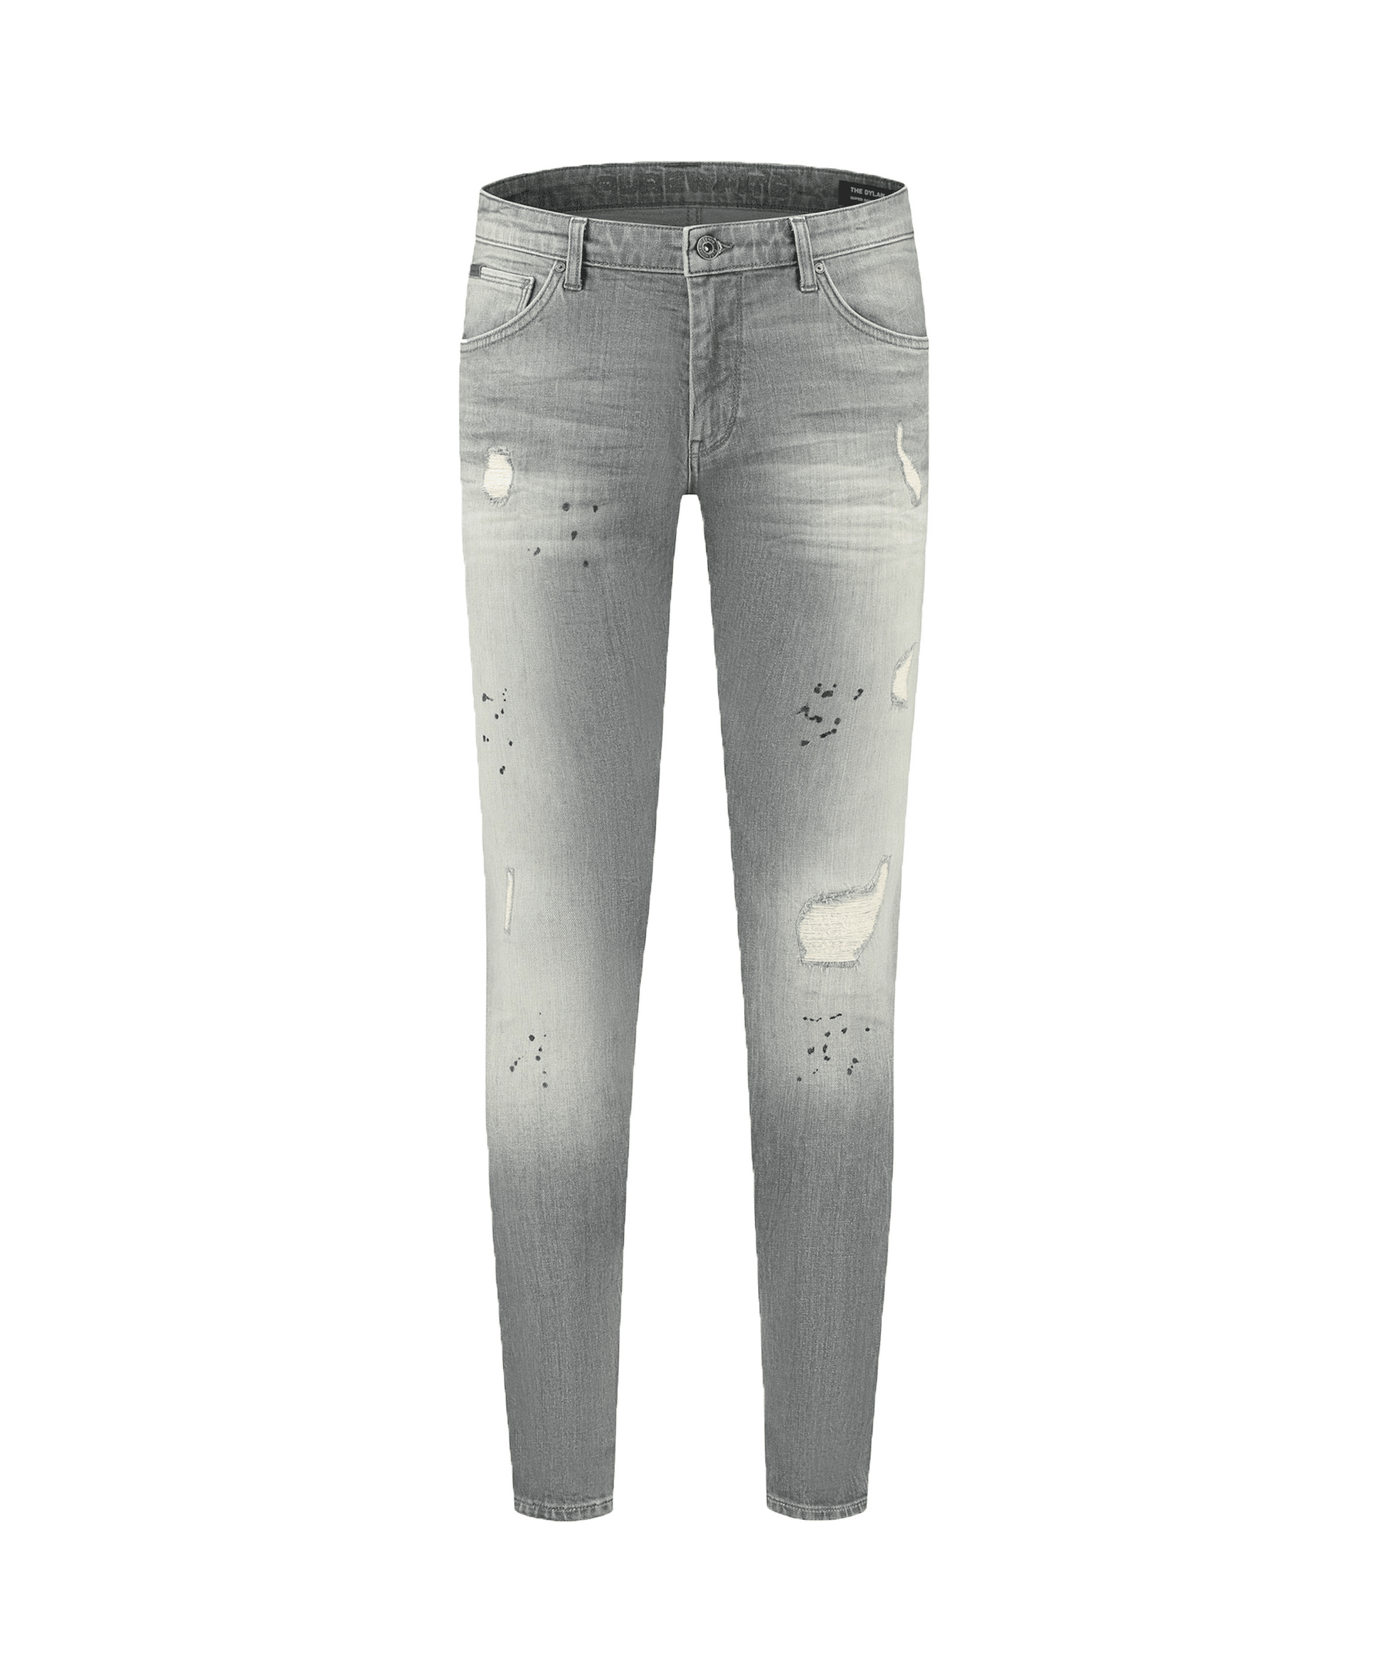 PureWhite - The Dylan W1130 - Jeans Denim Light Grey